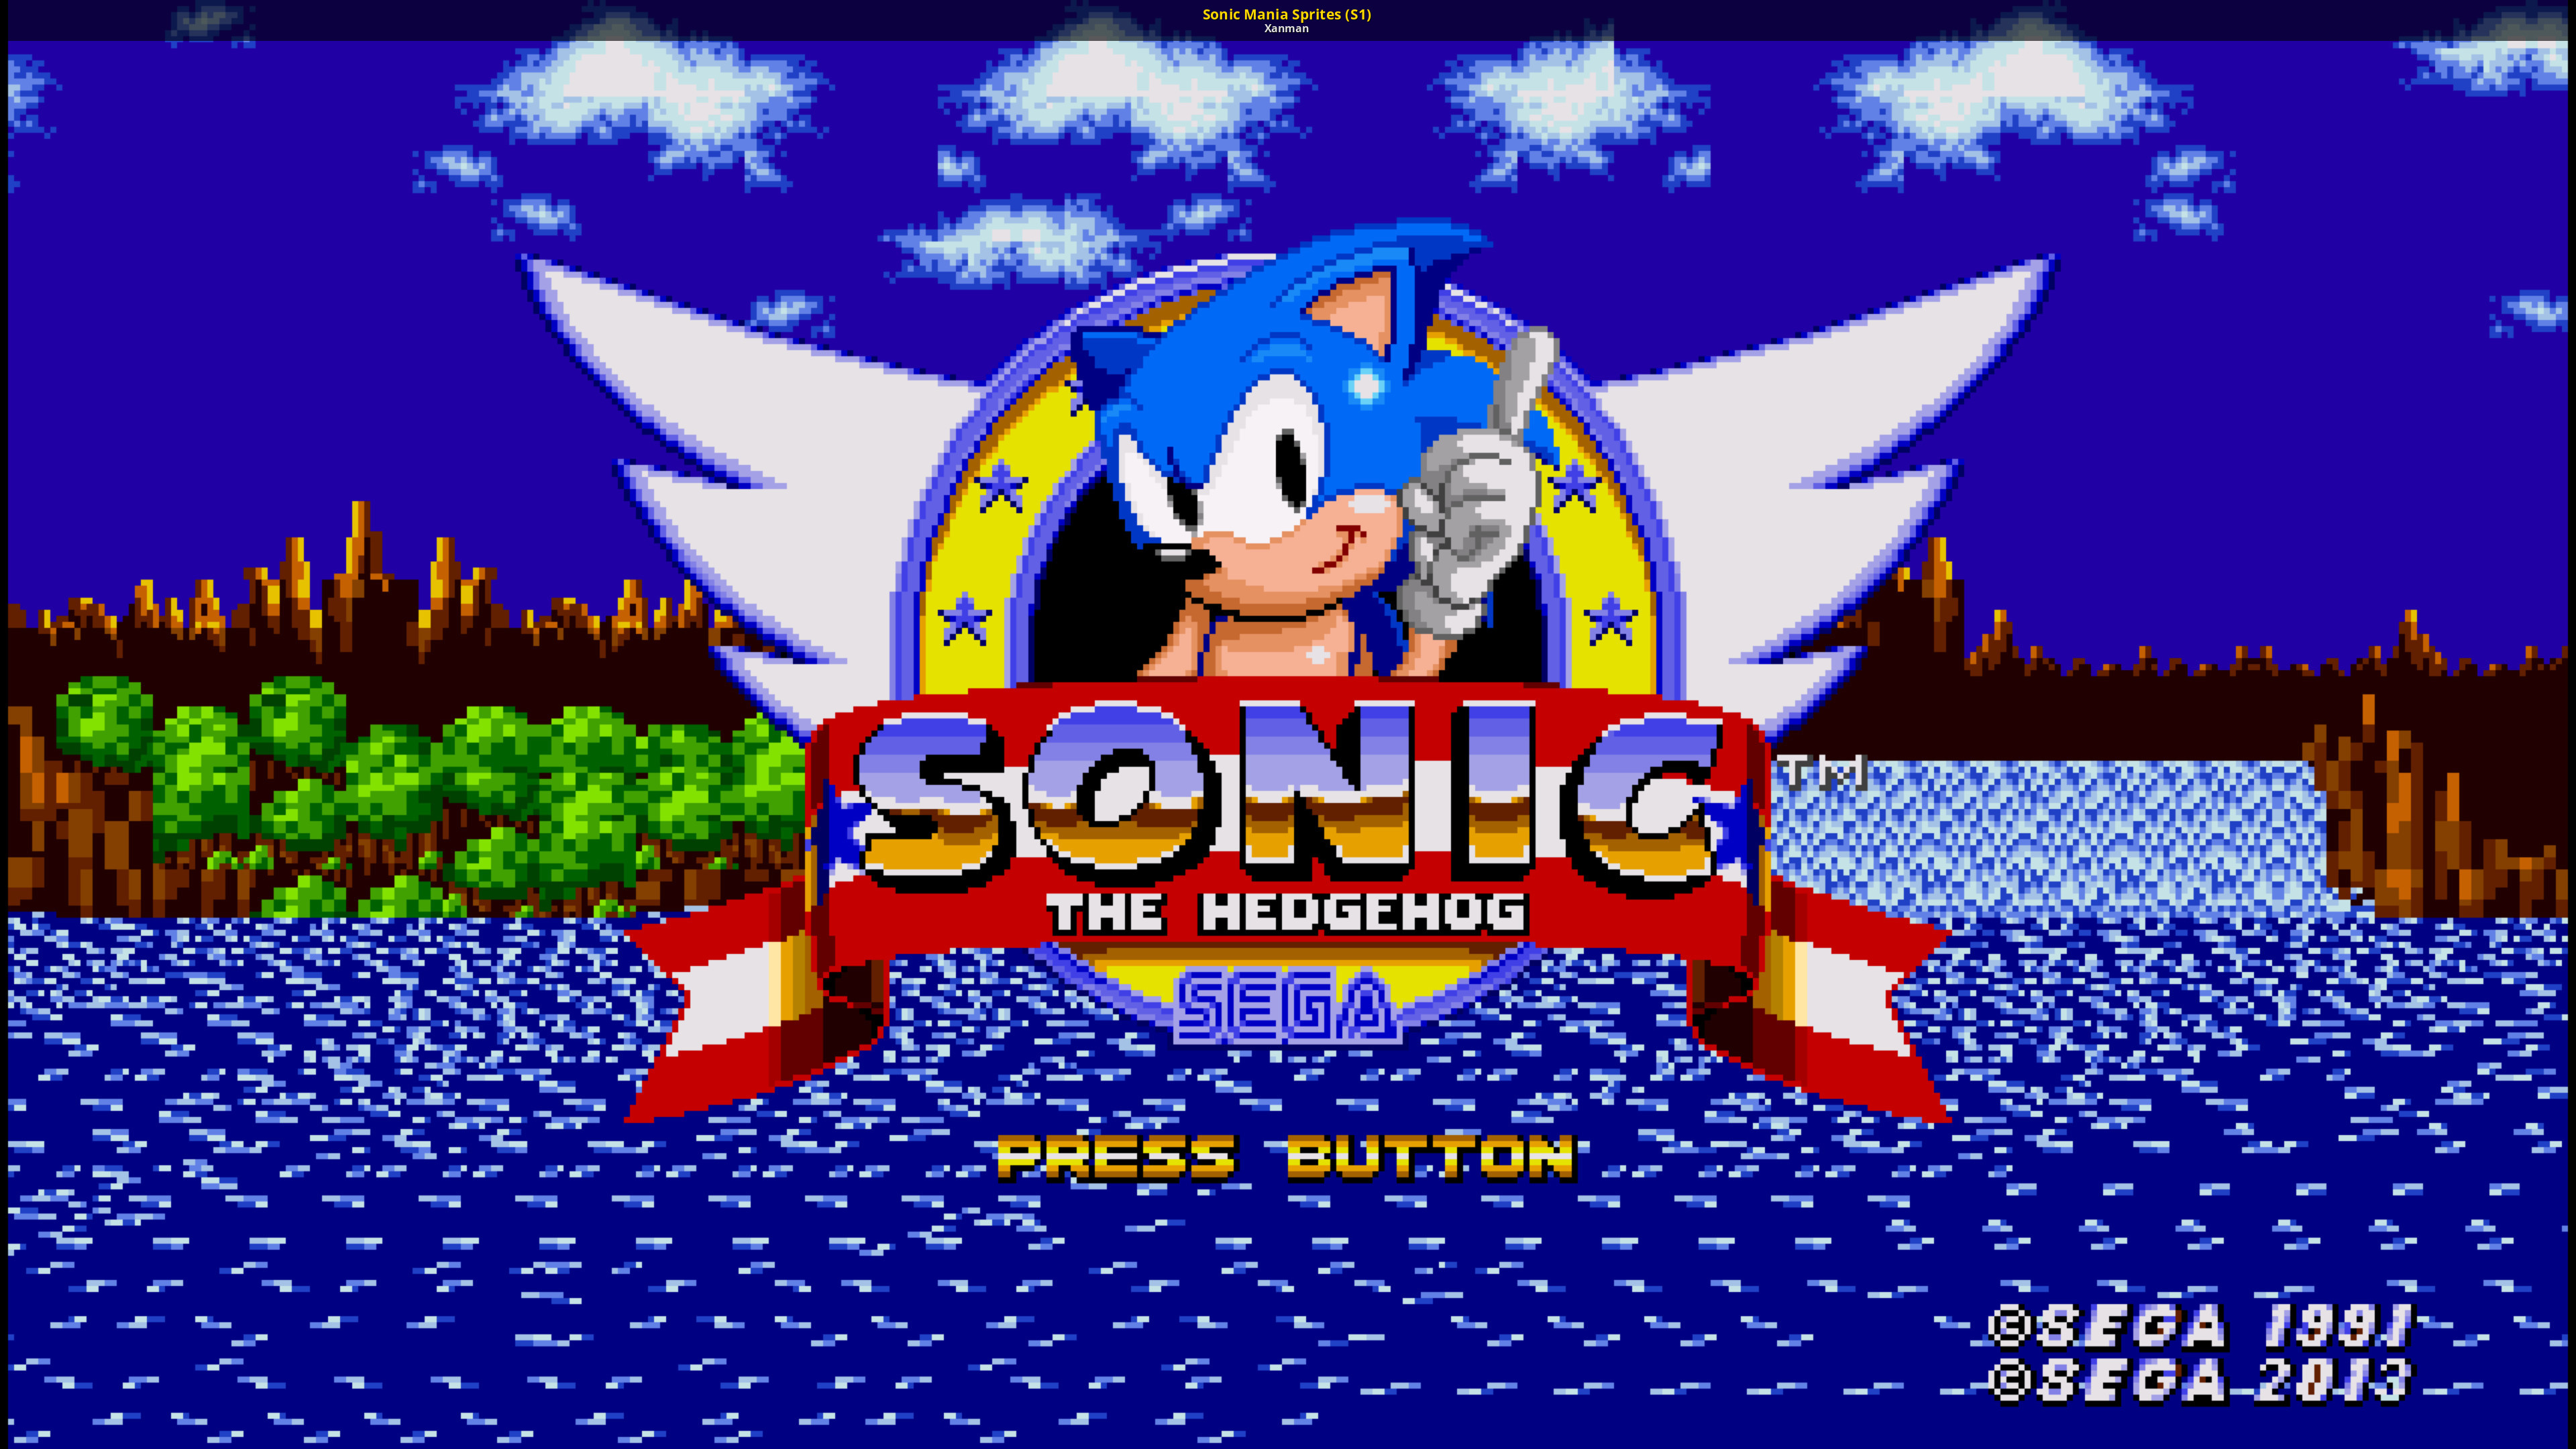 Sonic classic играть. Соник игра на сеге. Sonic the Hedgehog CD 16 бит. Sonic the Hedgehog 1991. Sonic the Hedgehog 2 (16 бит).